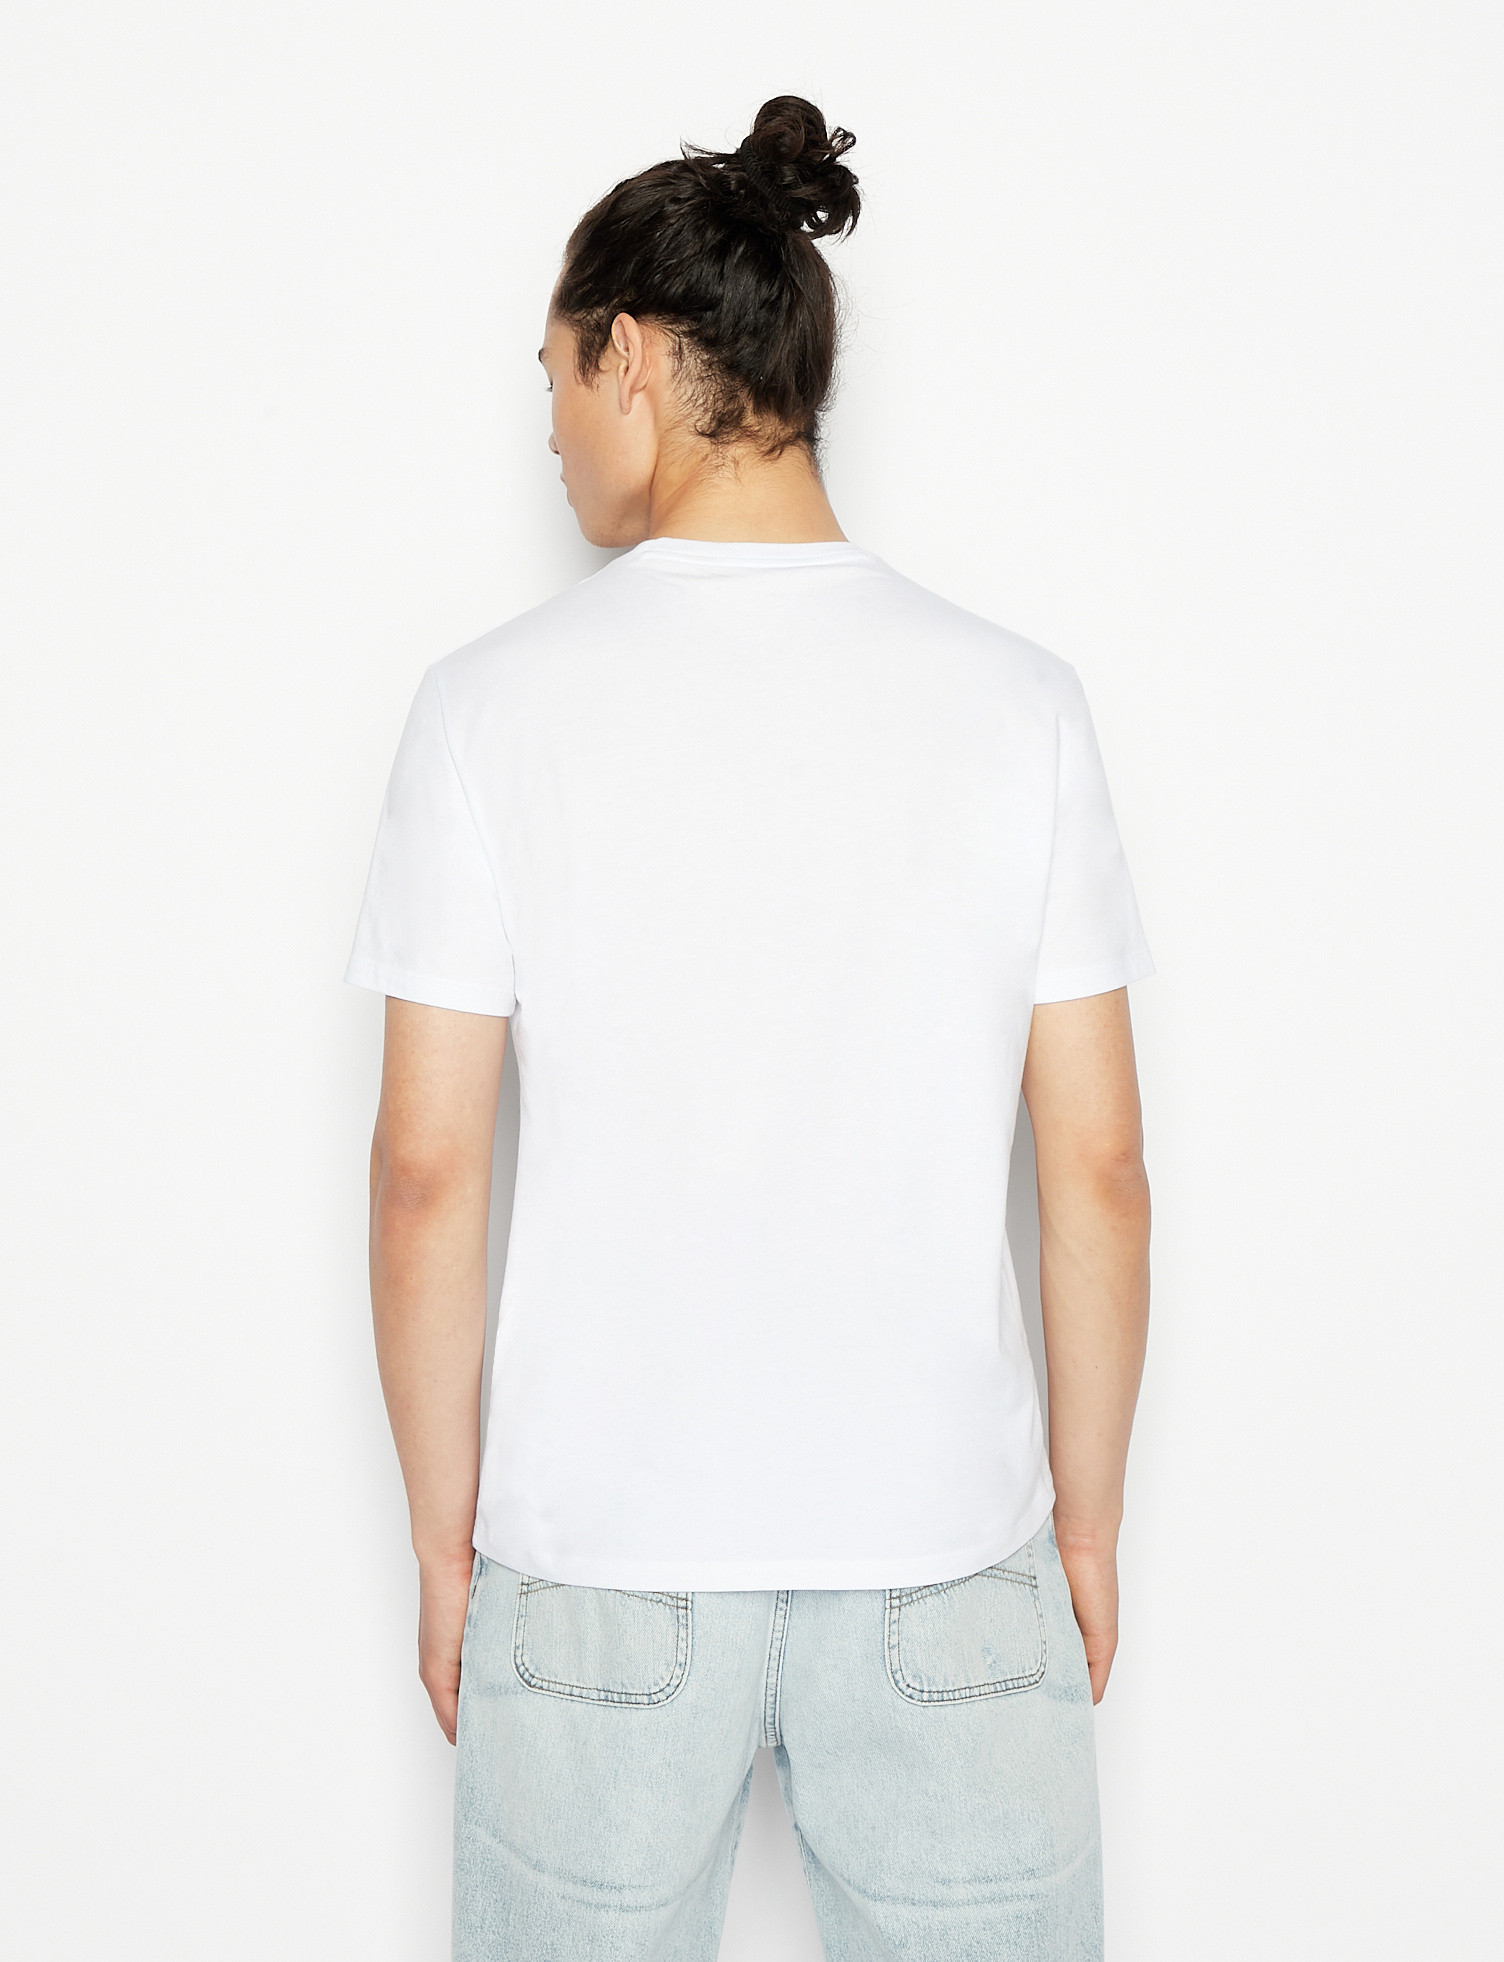 Armani Exchange - Regular fit T-shirt in organic cotton with logo, White, large image number 4